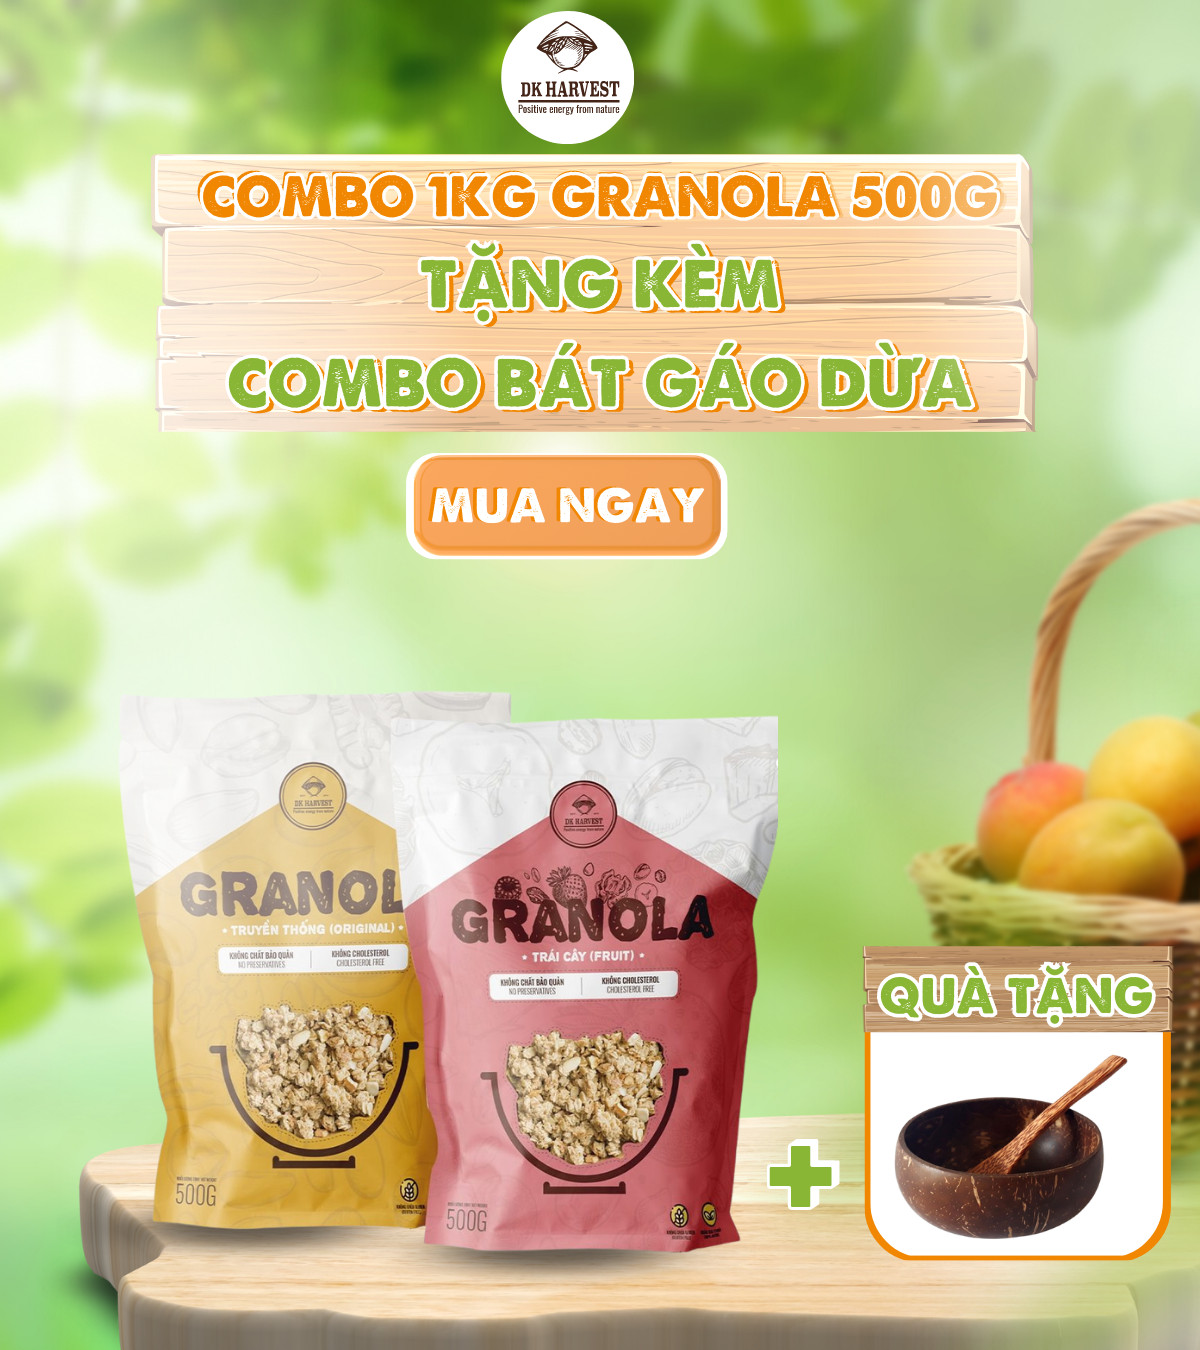 Combo 1kg Granola Siêu hạt DK Harvest - tặng kèm 1 bộ bát gáo dừa